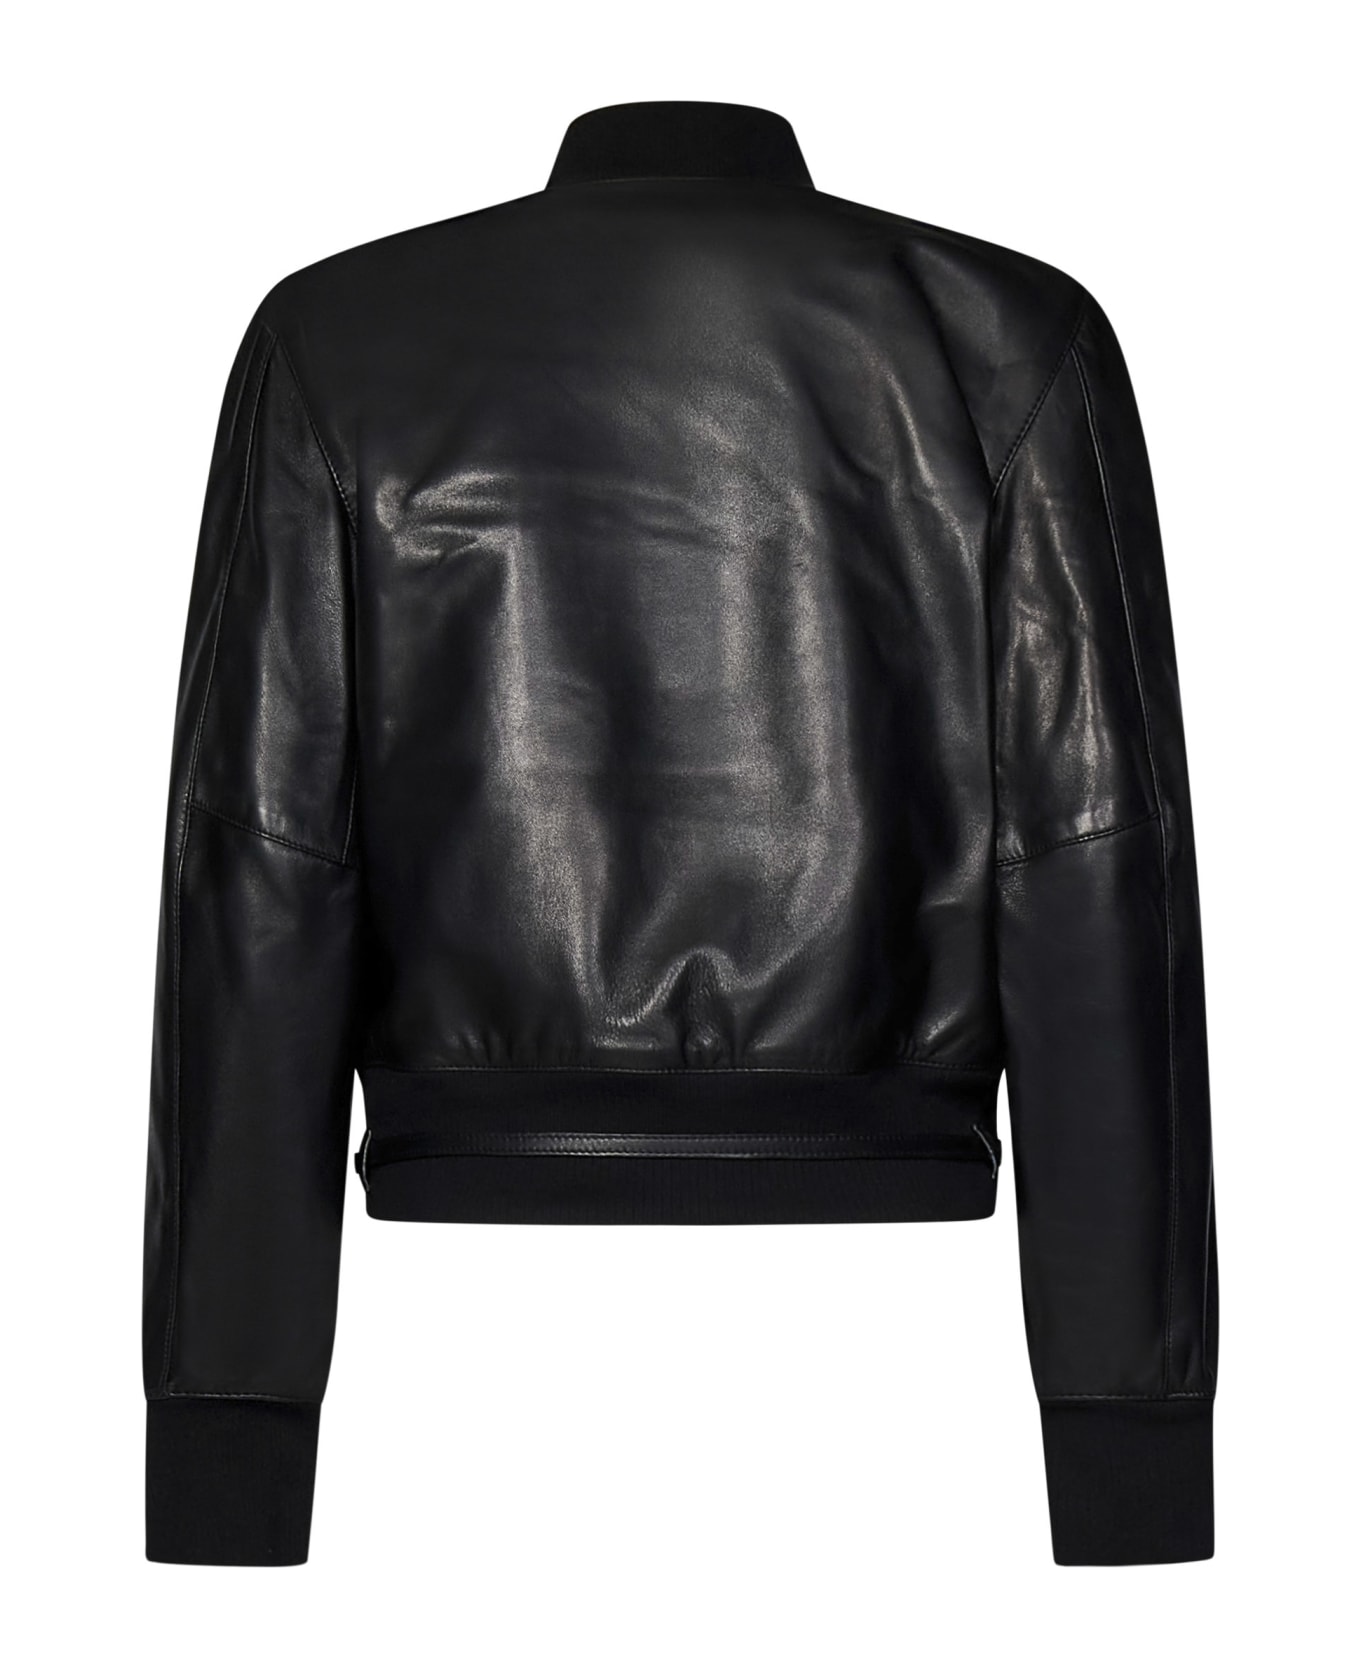 Givenchy Voyou Jacket - Black